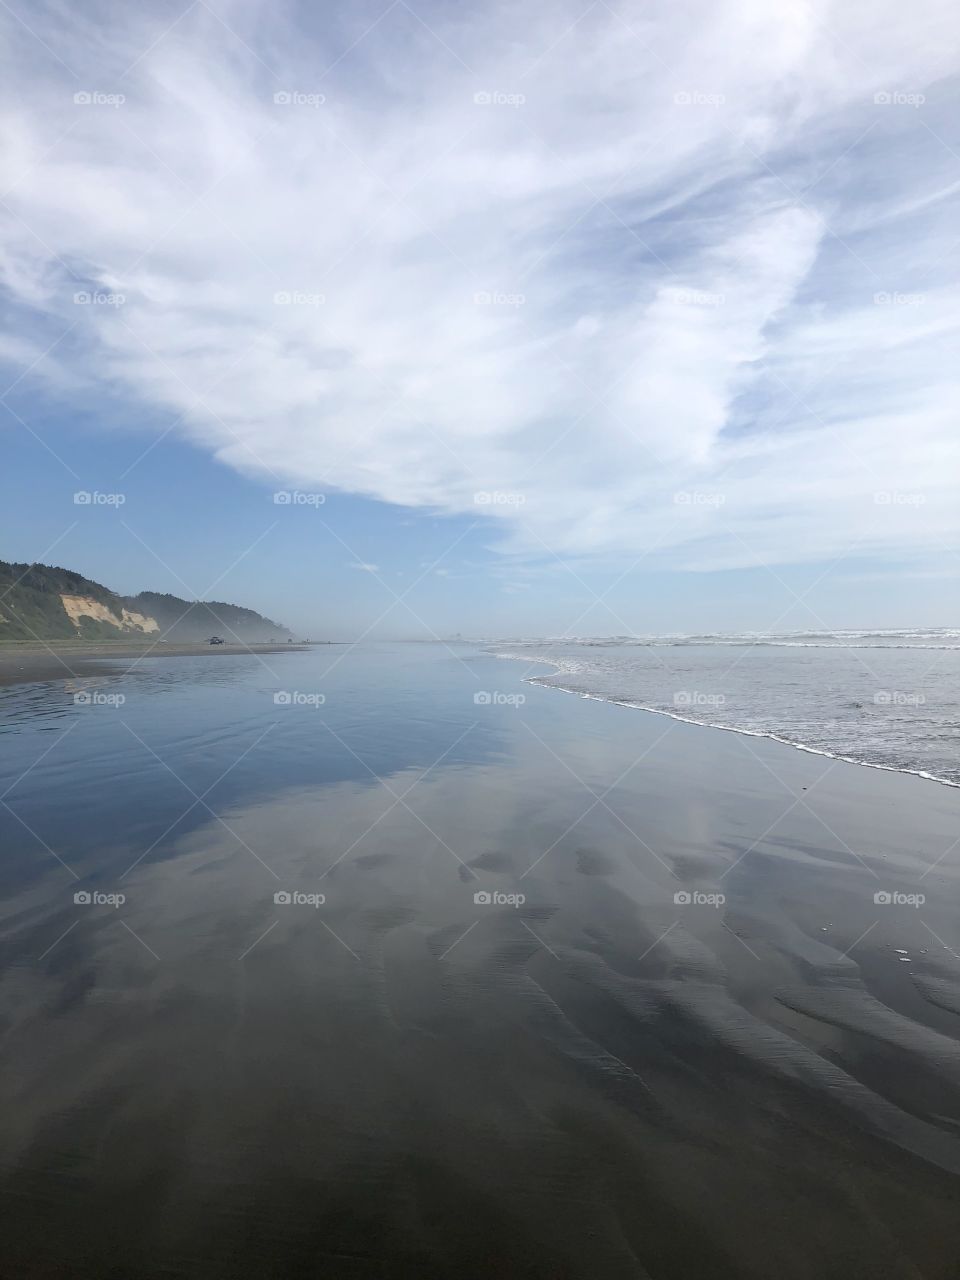 Ocean reflection